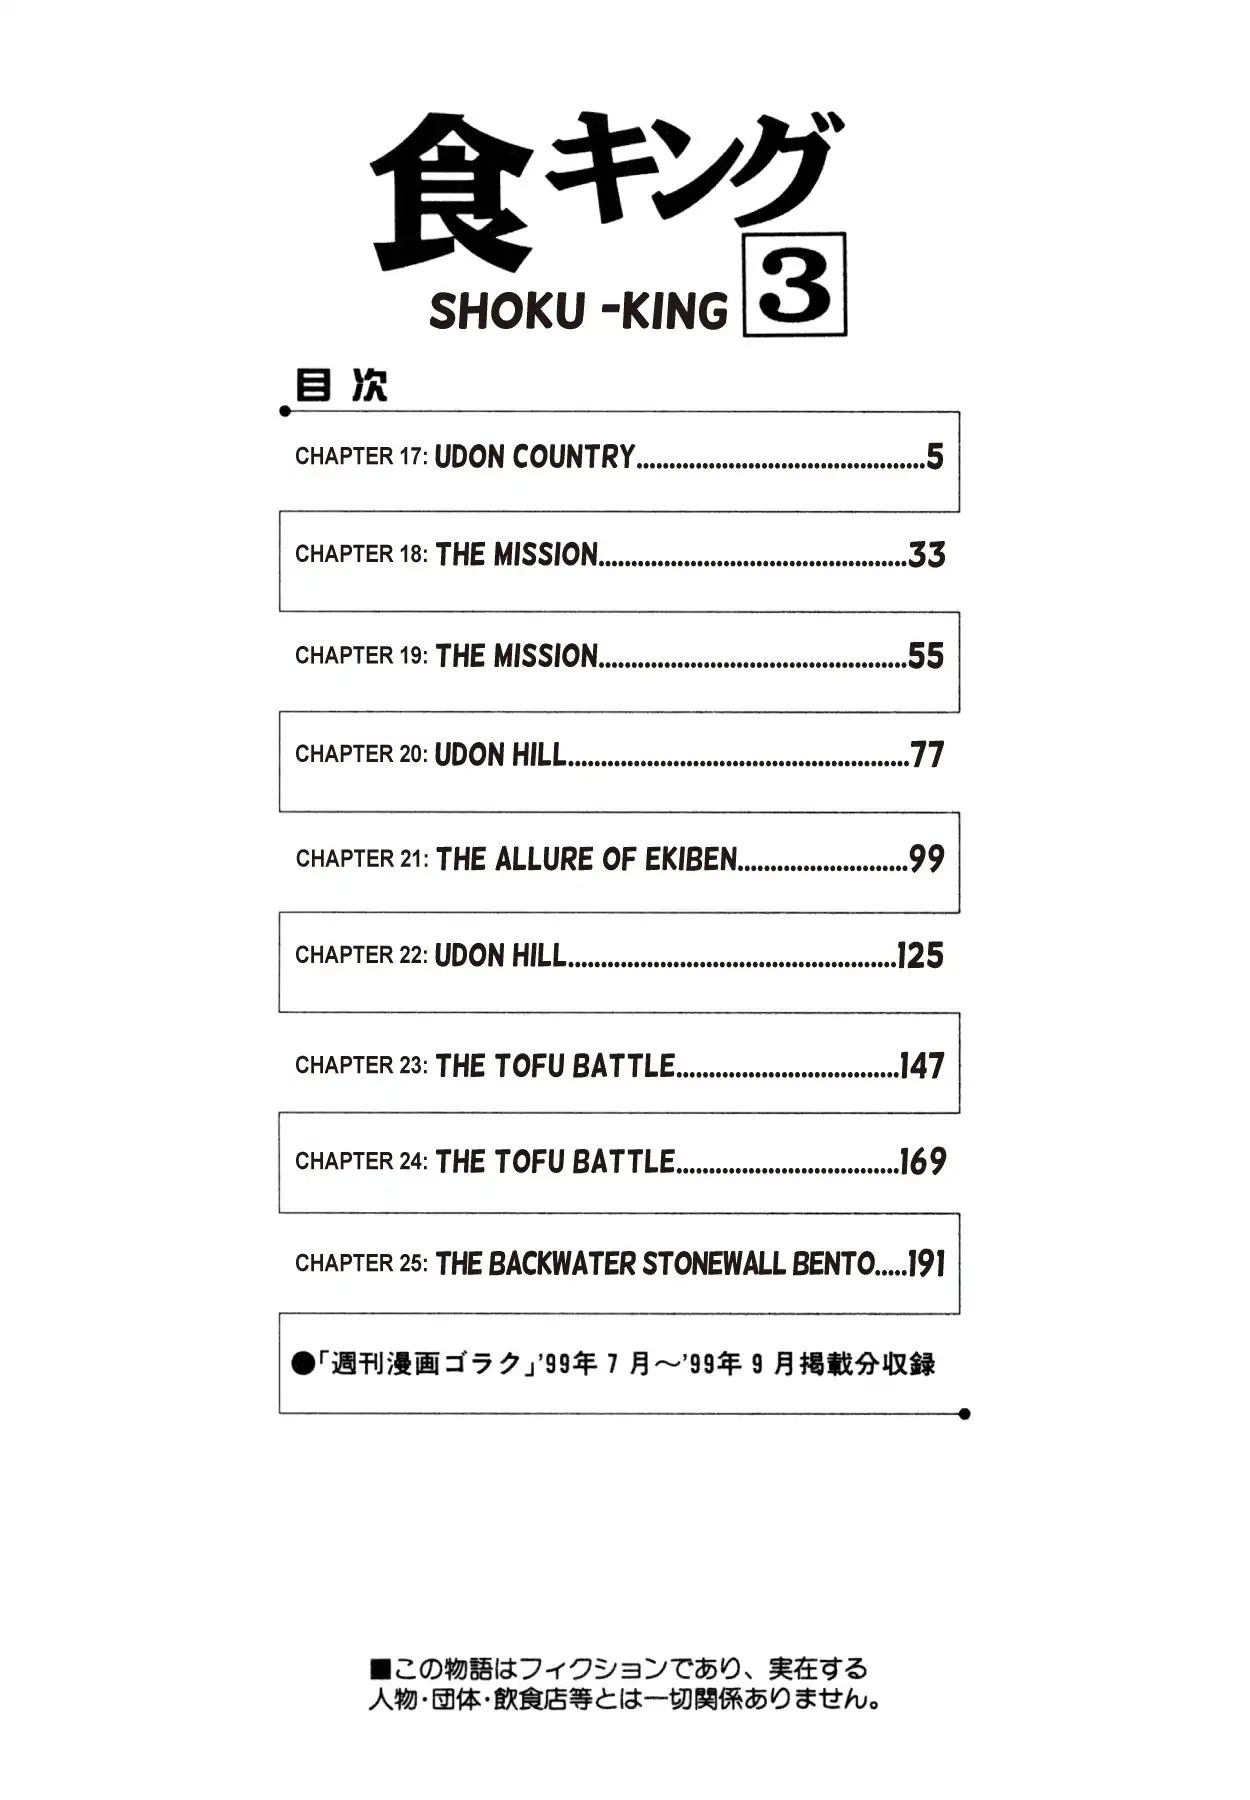 Shoku King VOL.3 CHAPTER 17: UDON COUNTRY